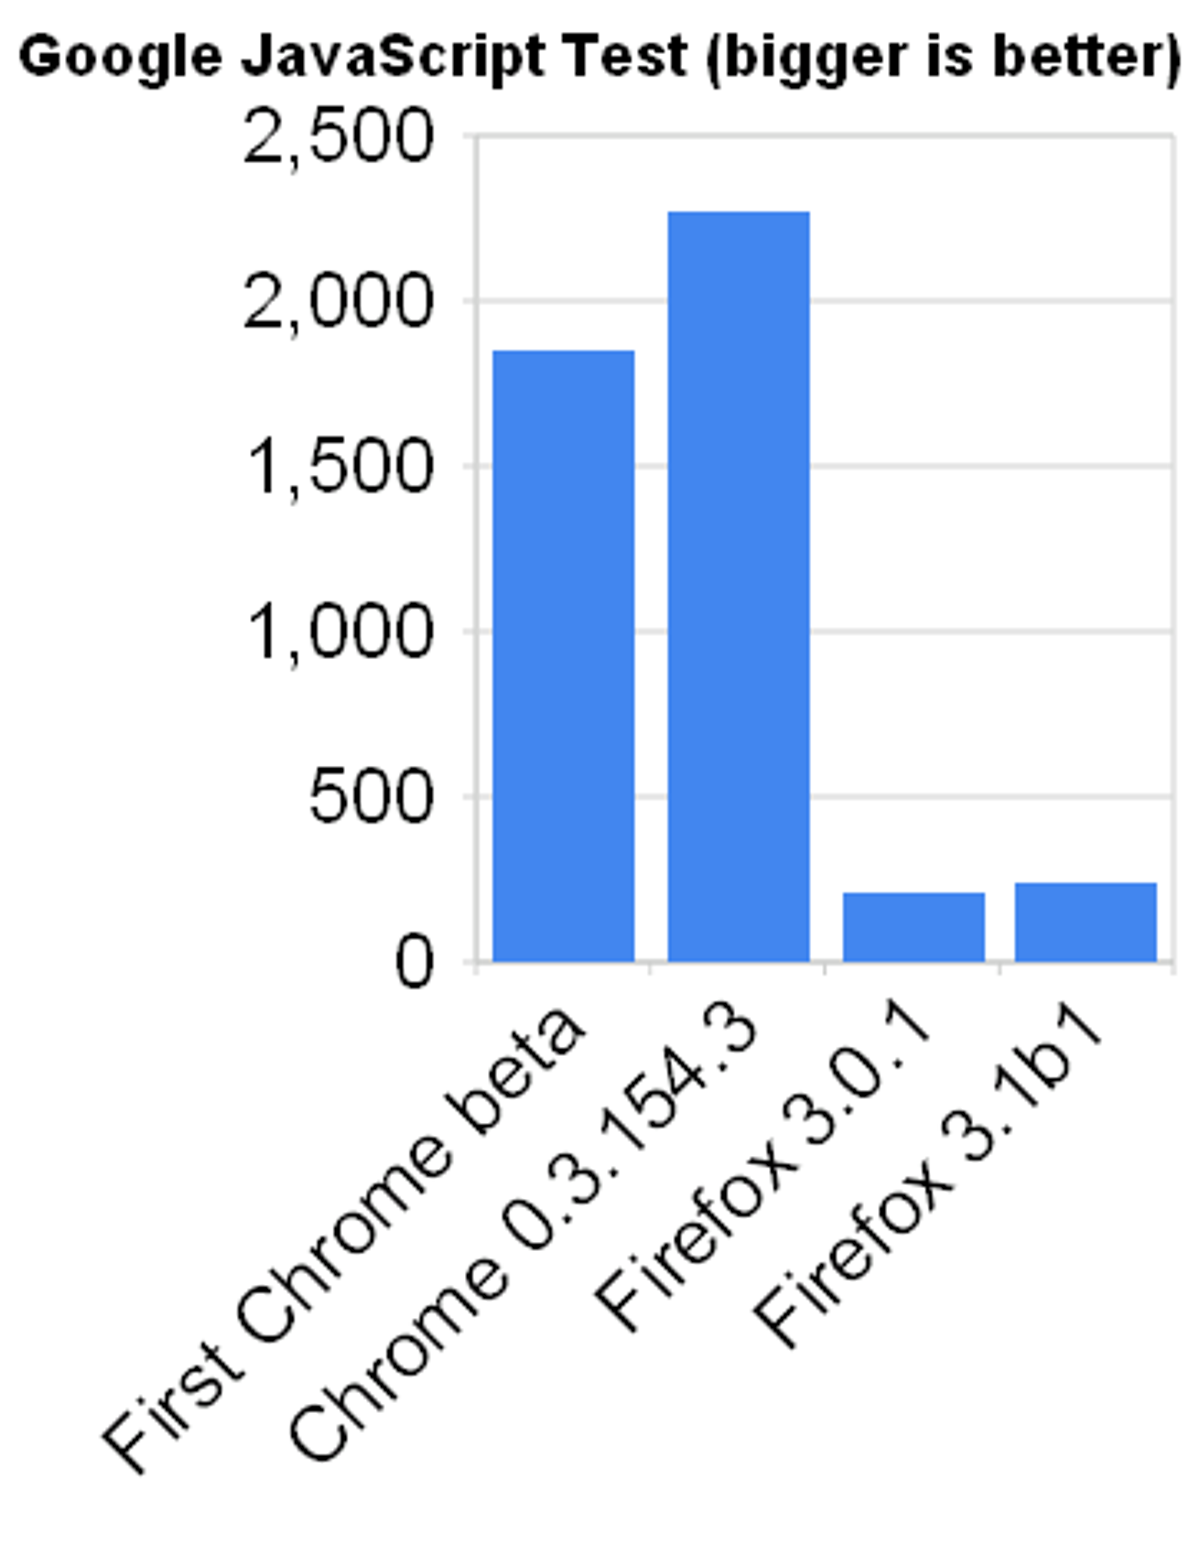 Chrome vs. Firefox JavaScript scores